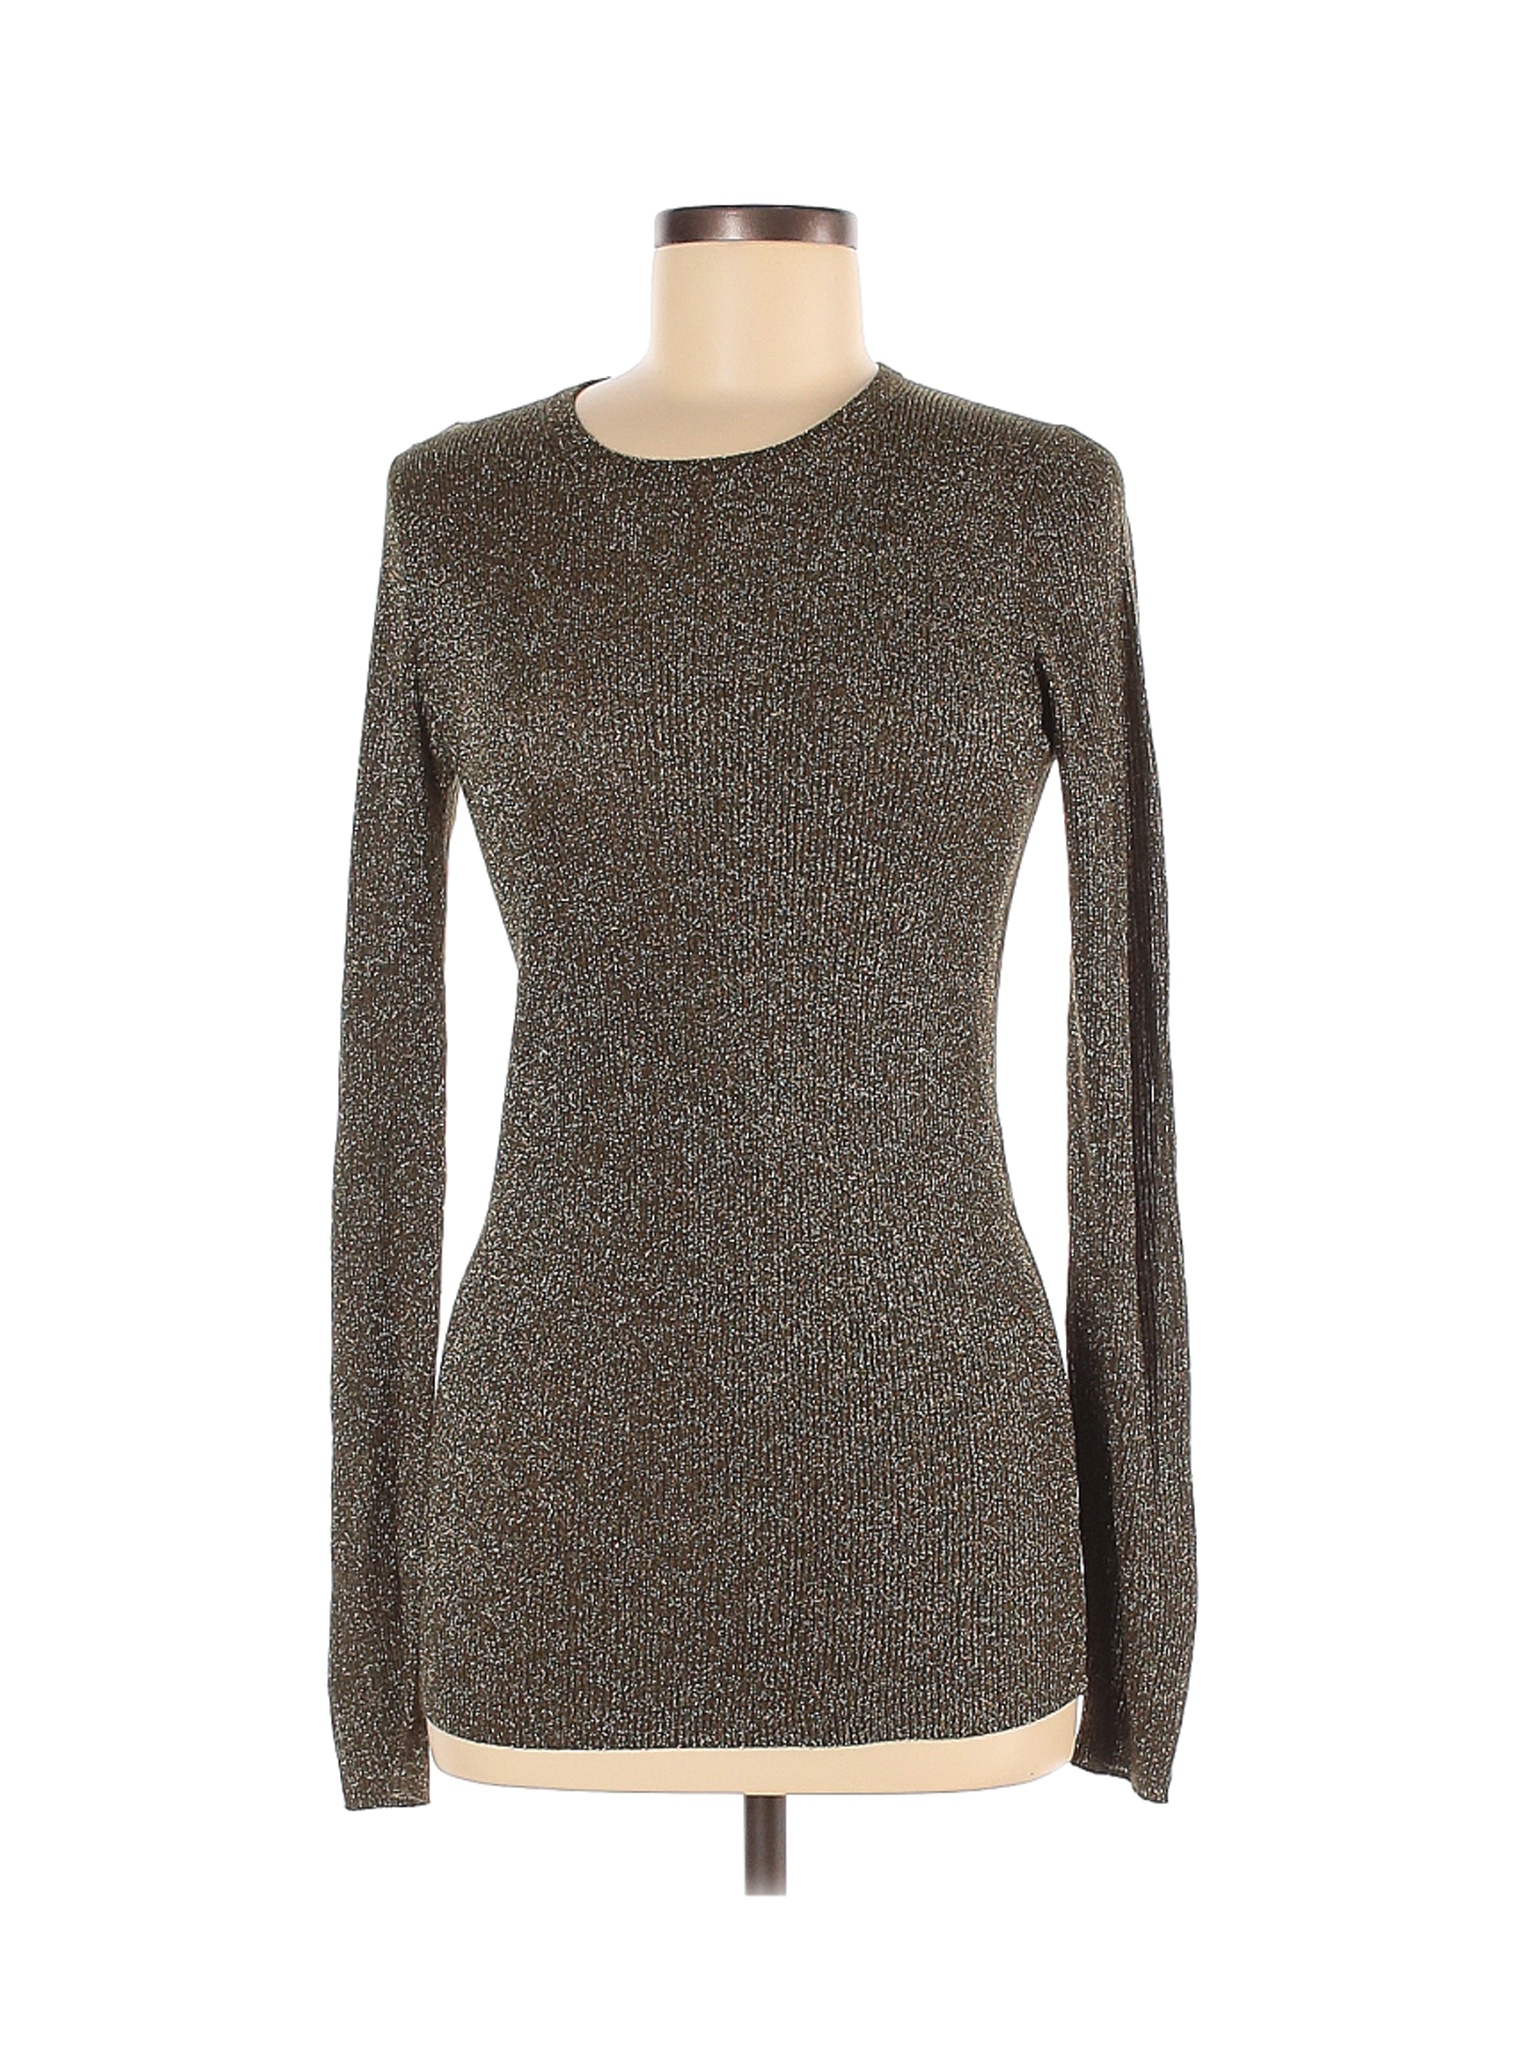 Ann Taylor Women Green Pullover Sweater M | eBay